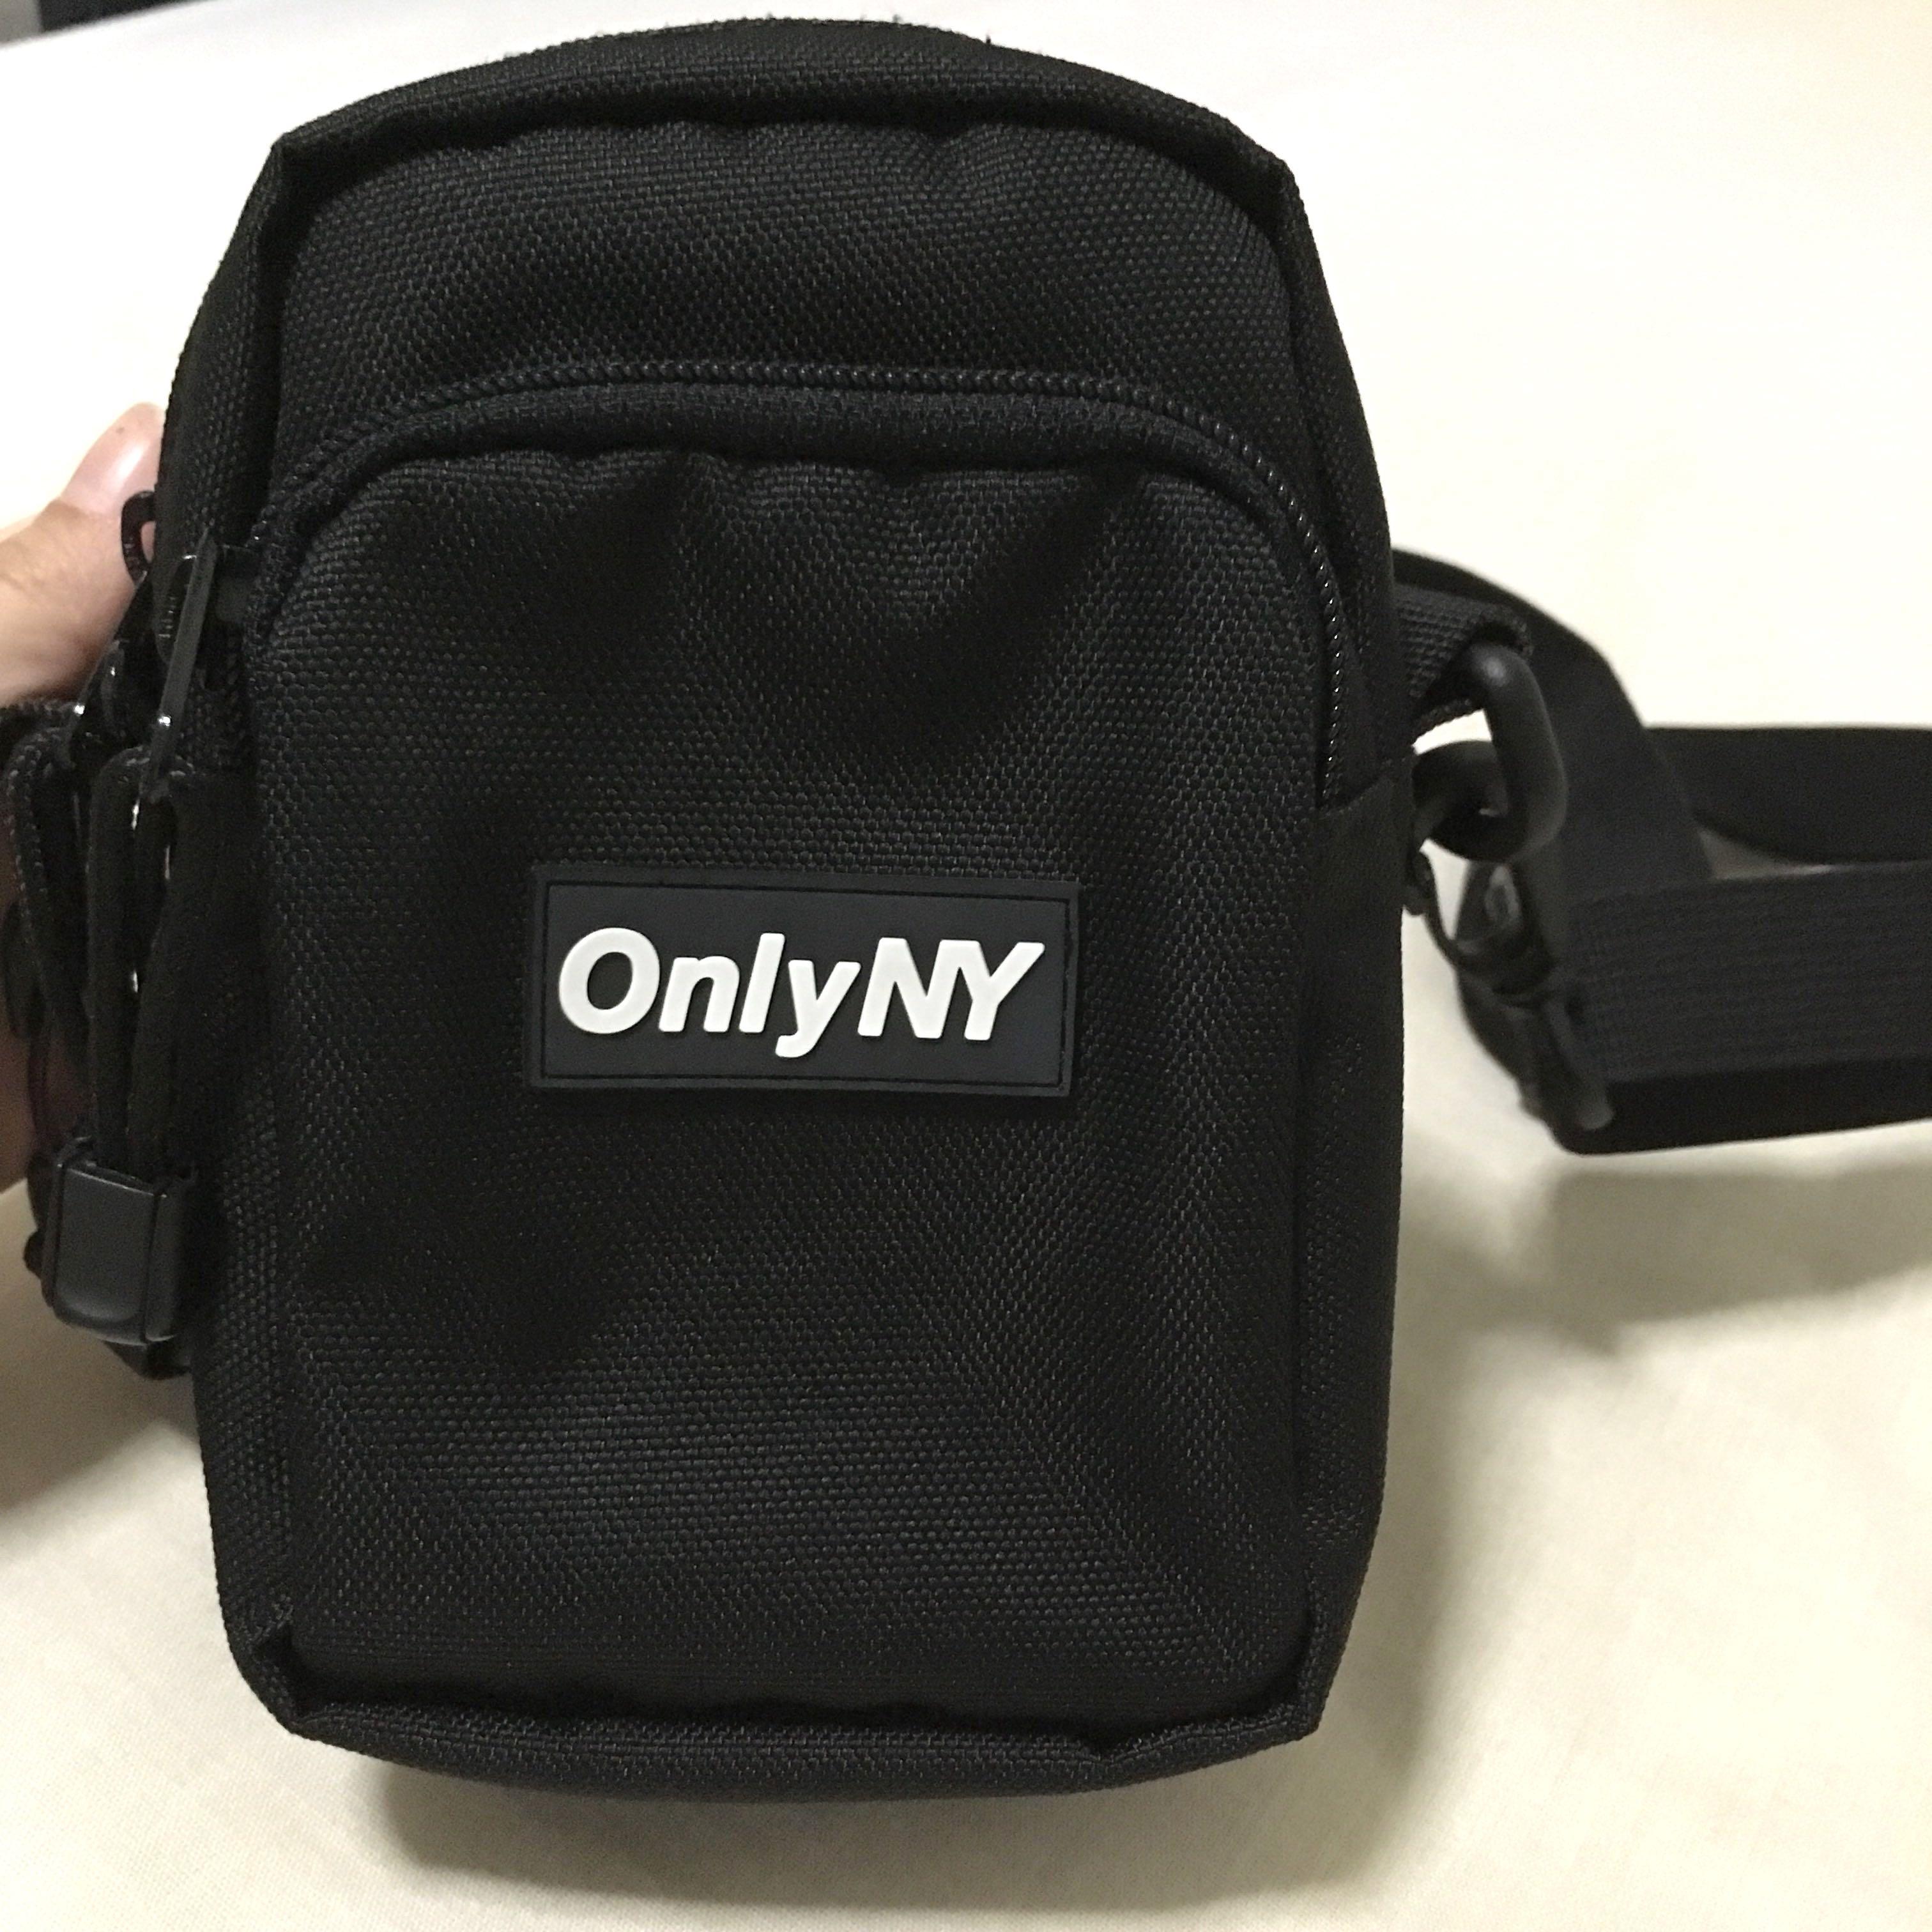 Only NY compact camera bag